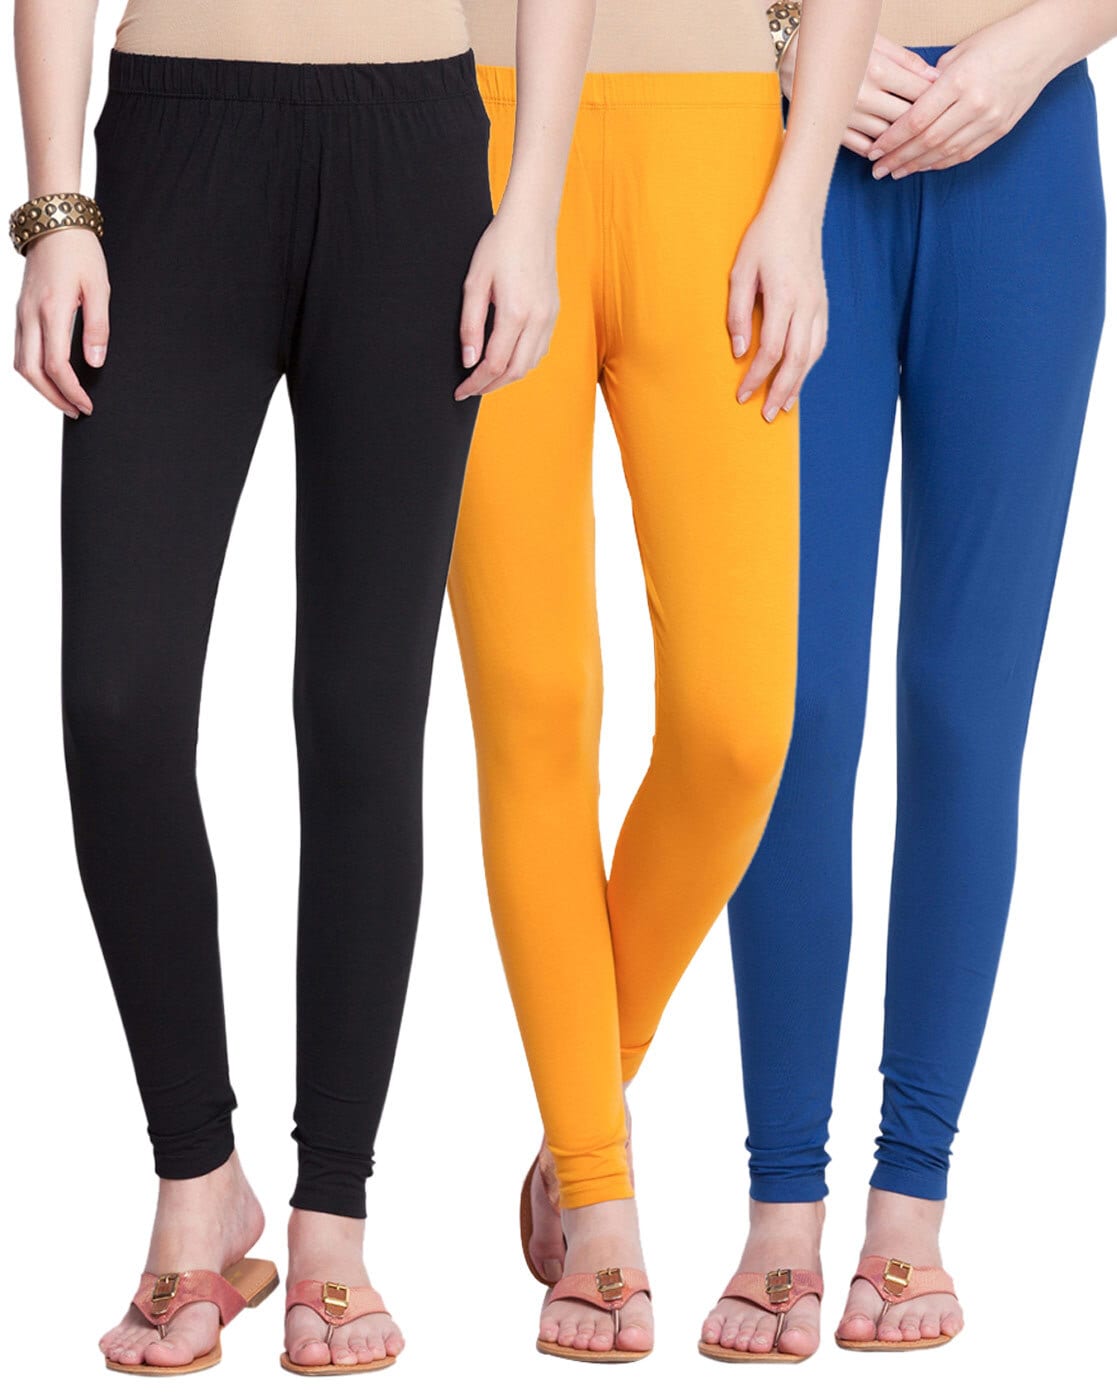 Wholesale Women's Active Leggings in Assorted Colors - DollarDays